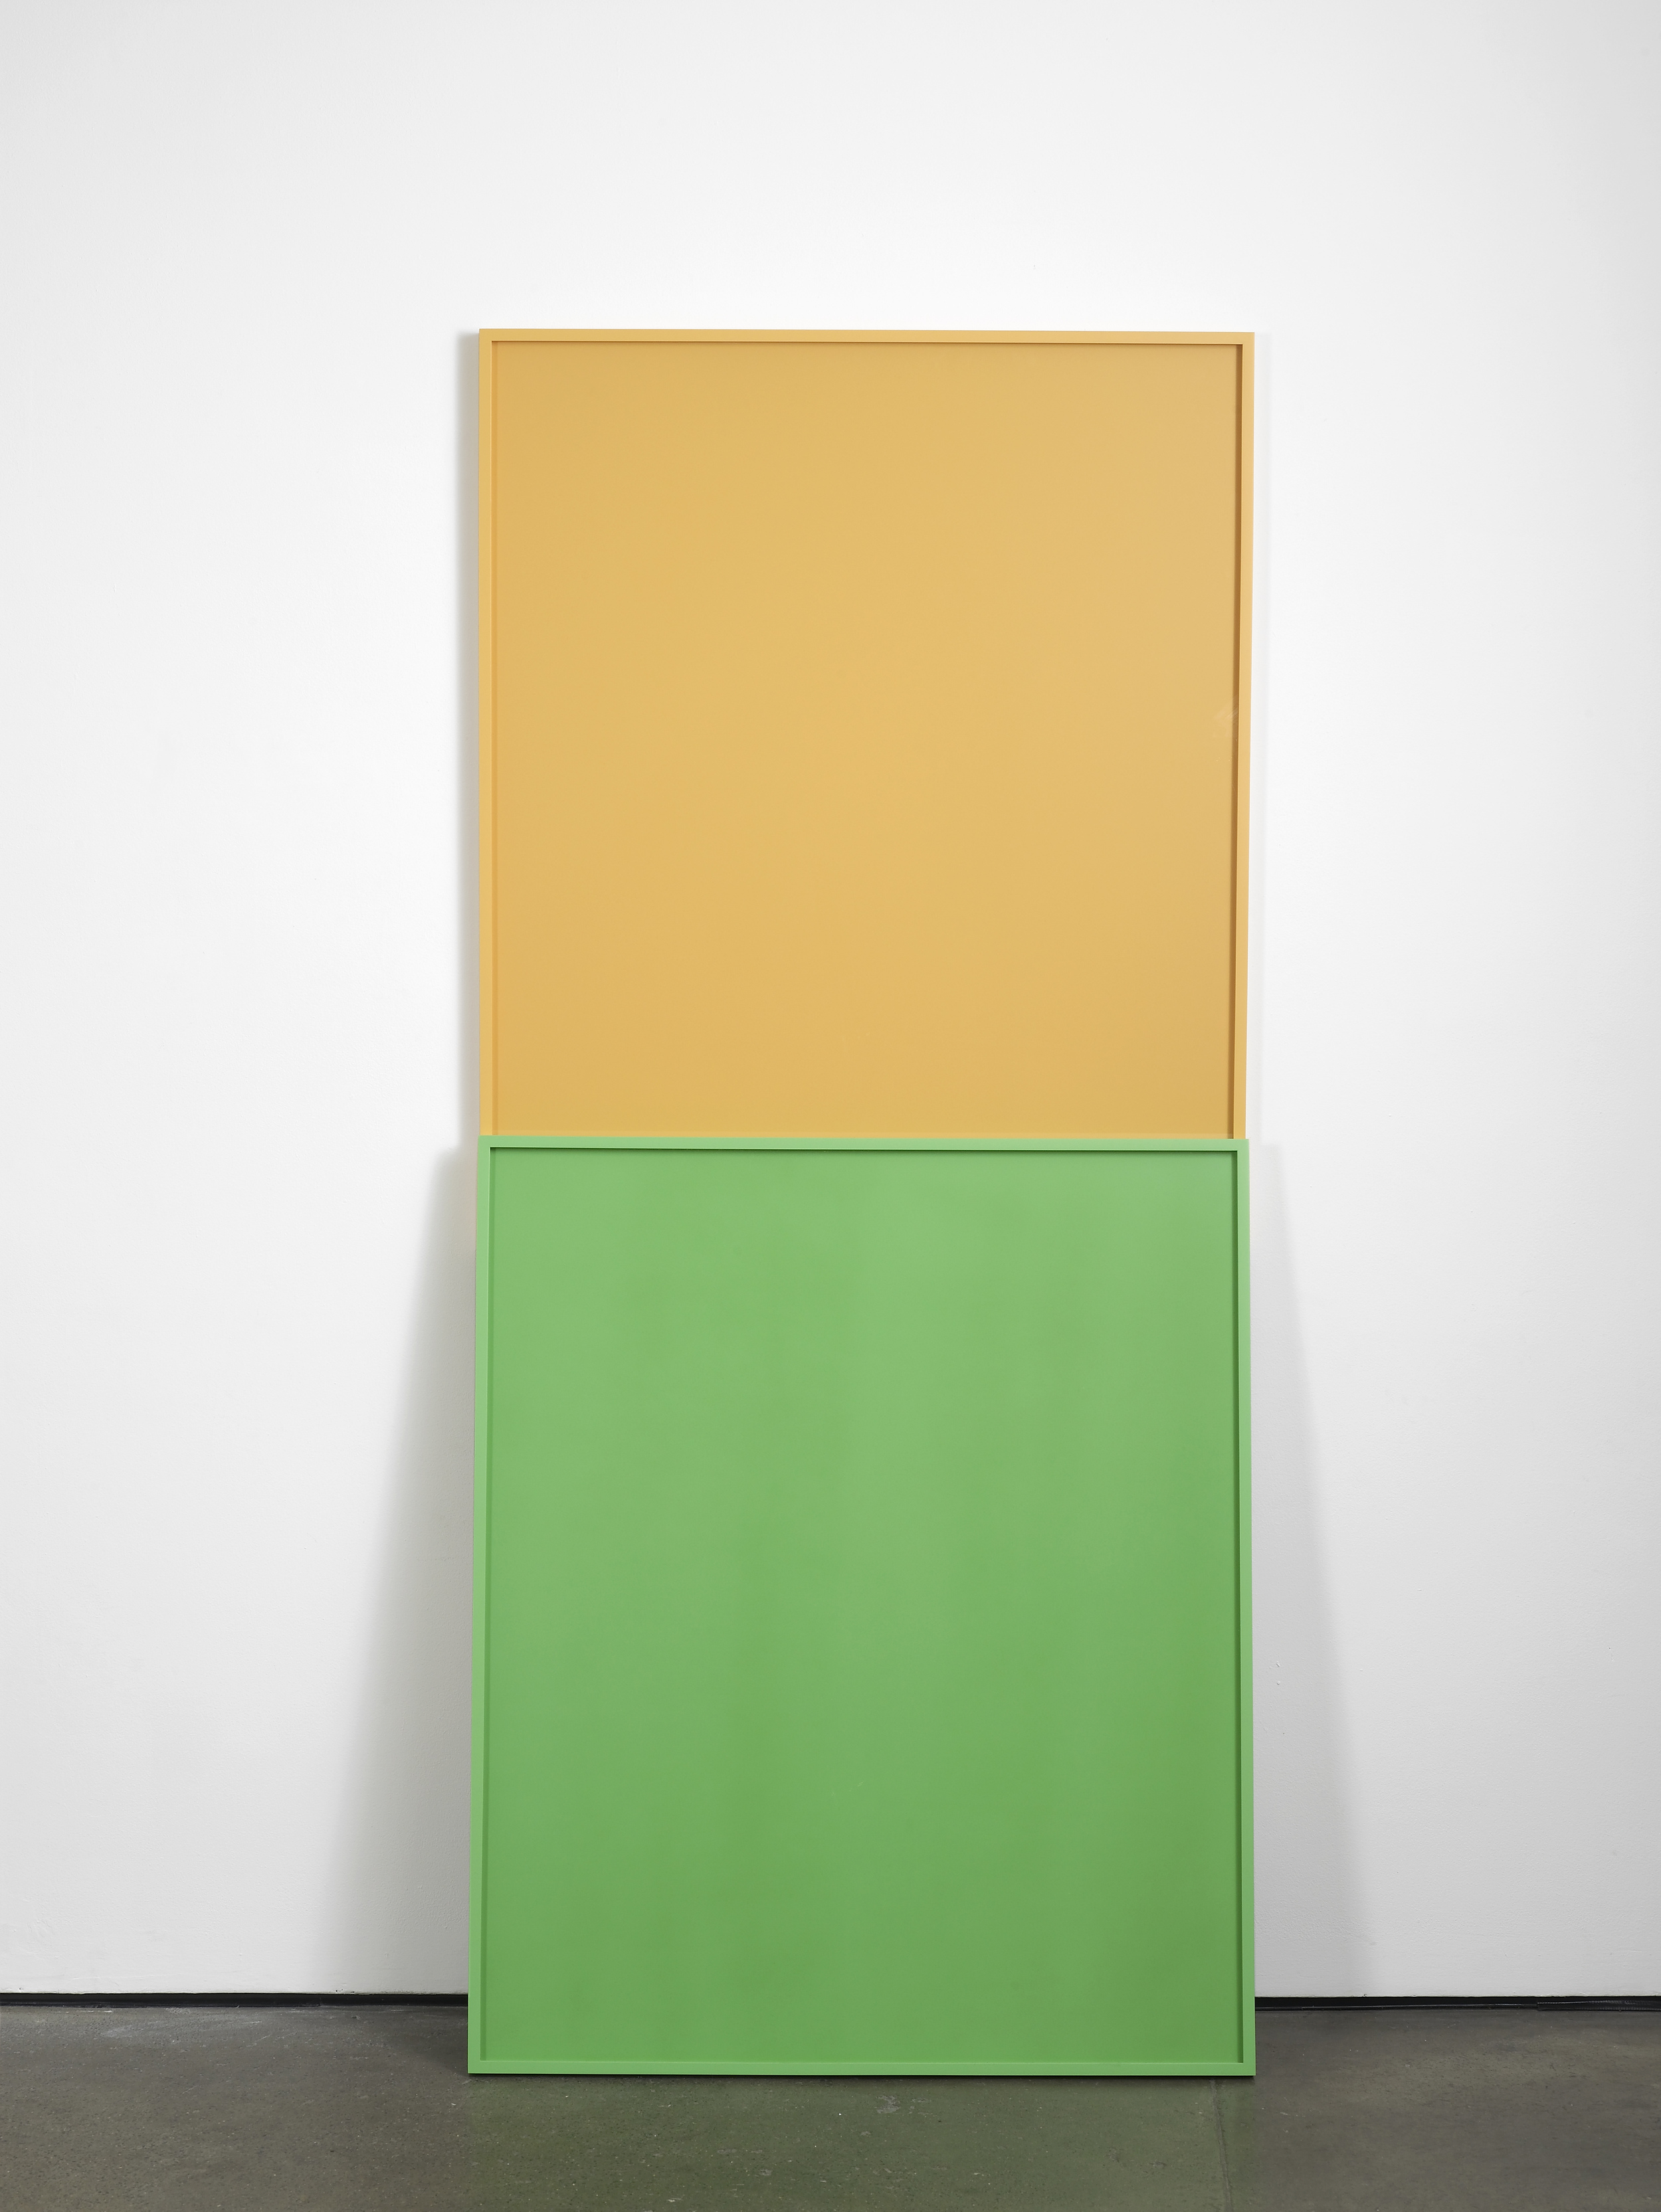     Matt Connors Folkways (second version) 2012 Two artist frames 2 parts, each part: 122 x 102 cm / 48 x 40.1 in 